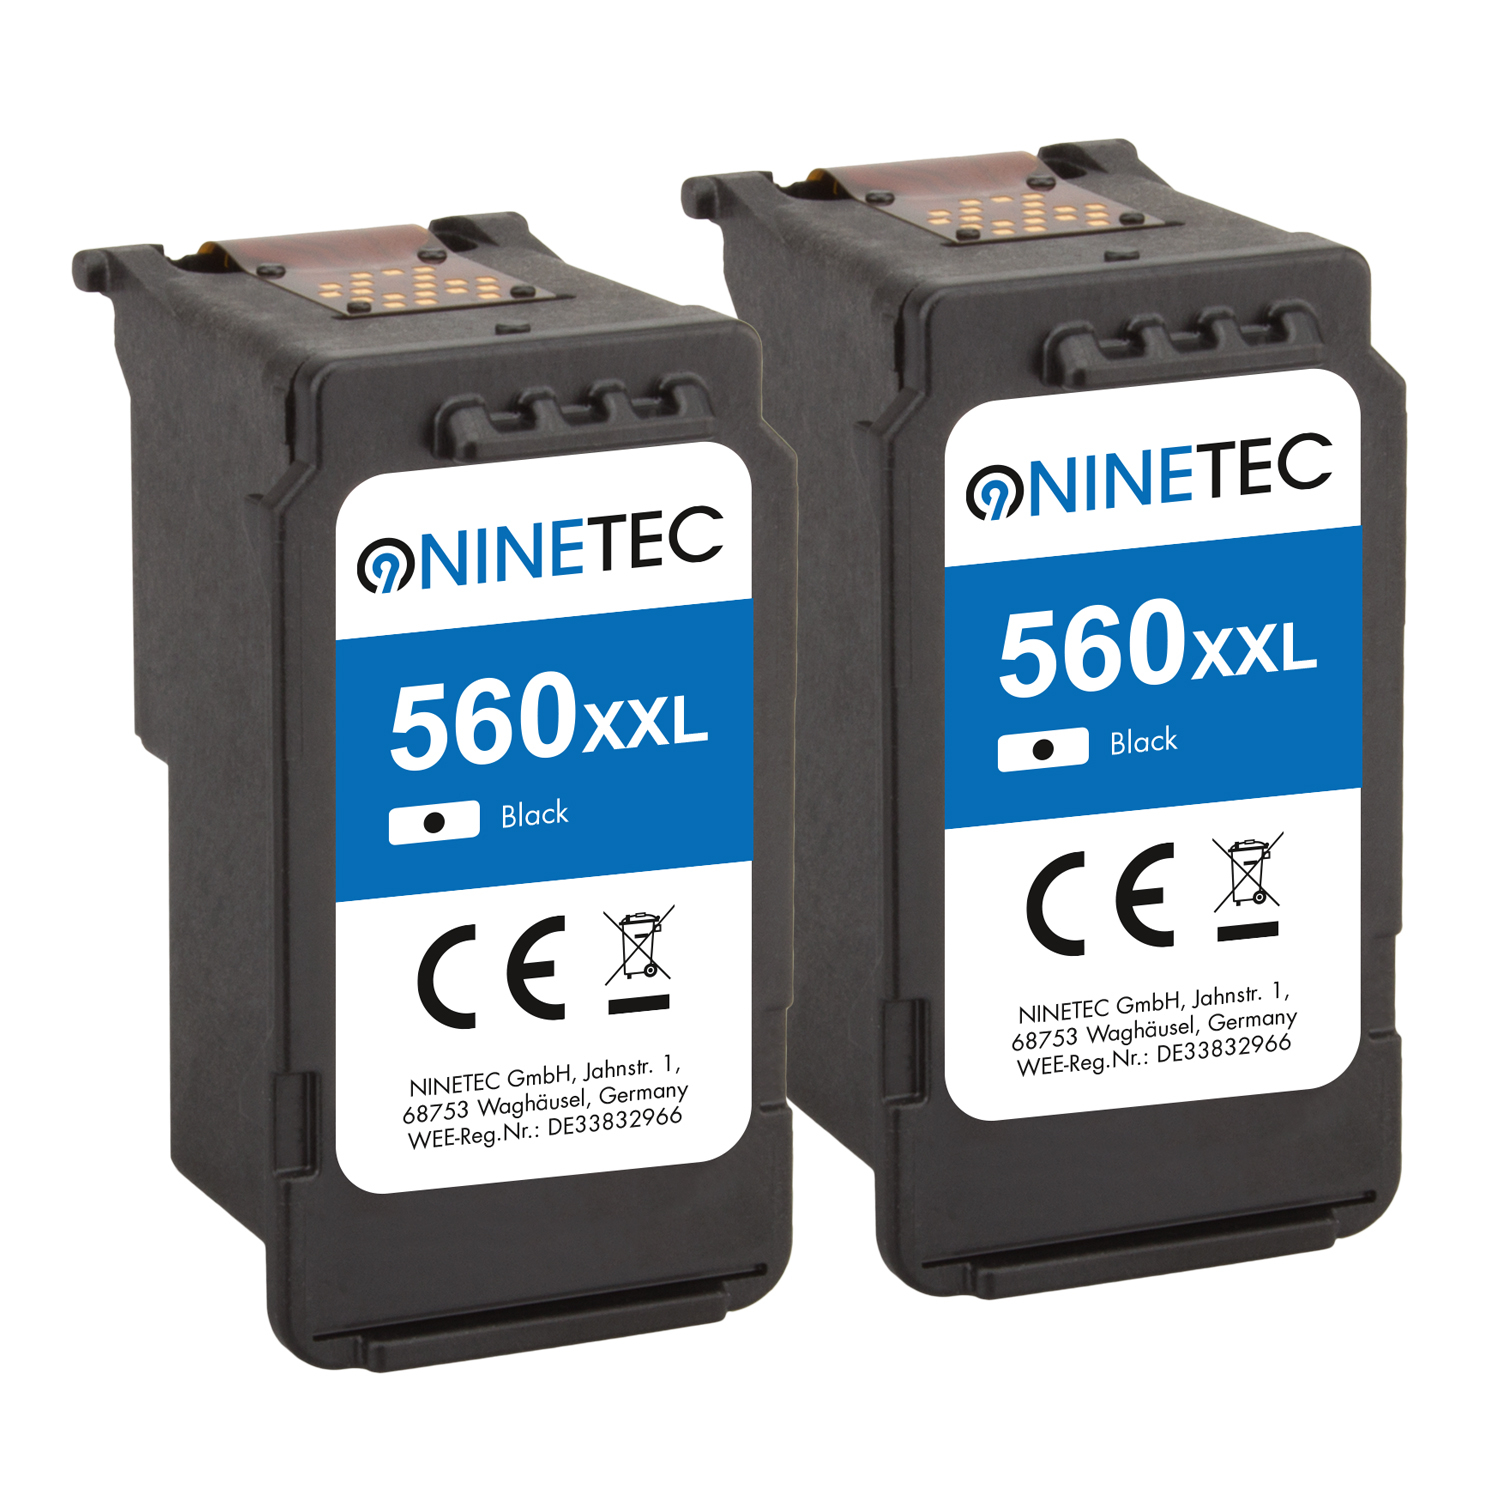 NINETEC 2er Set EcoLongLife Tintenpatronen C Canon black 001, Patronen ersetzt XXL C Black (3712 001) 3730 PG-560